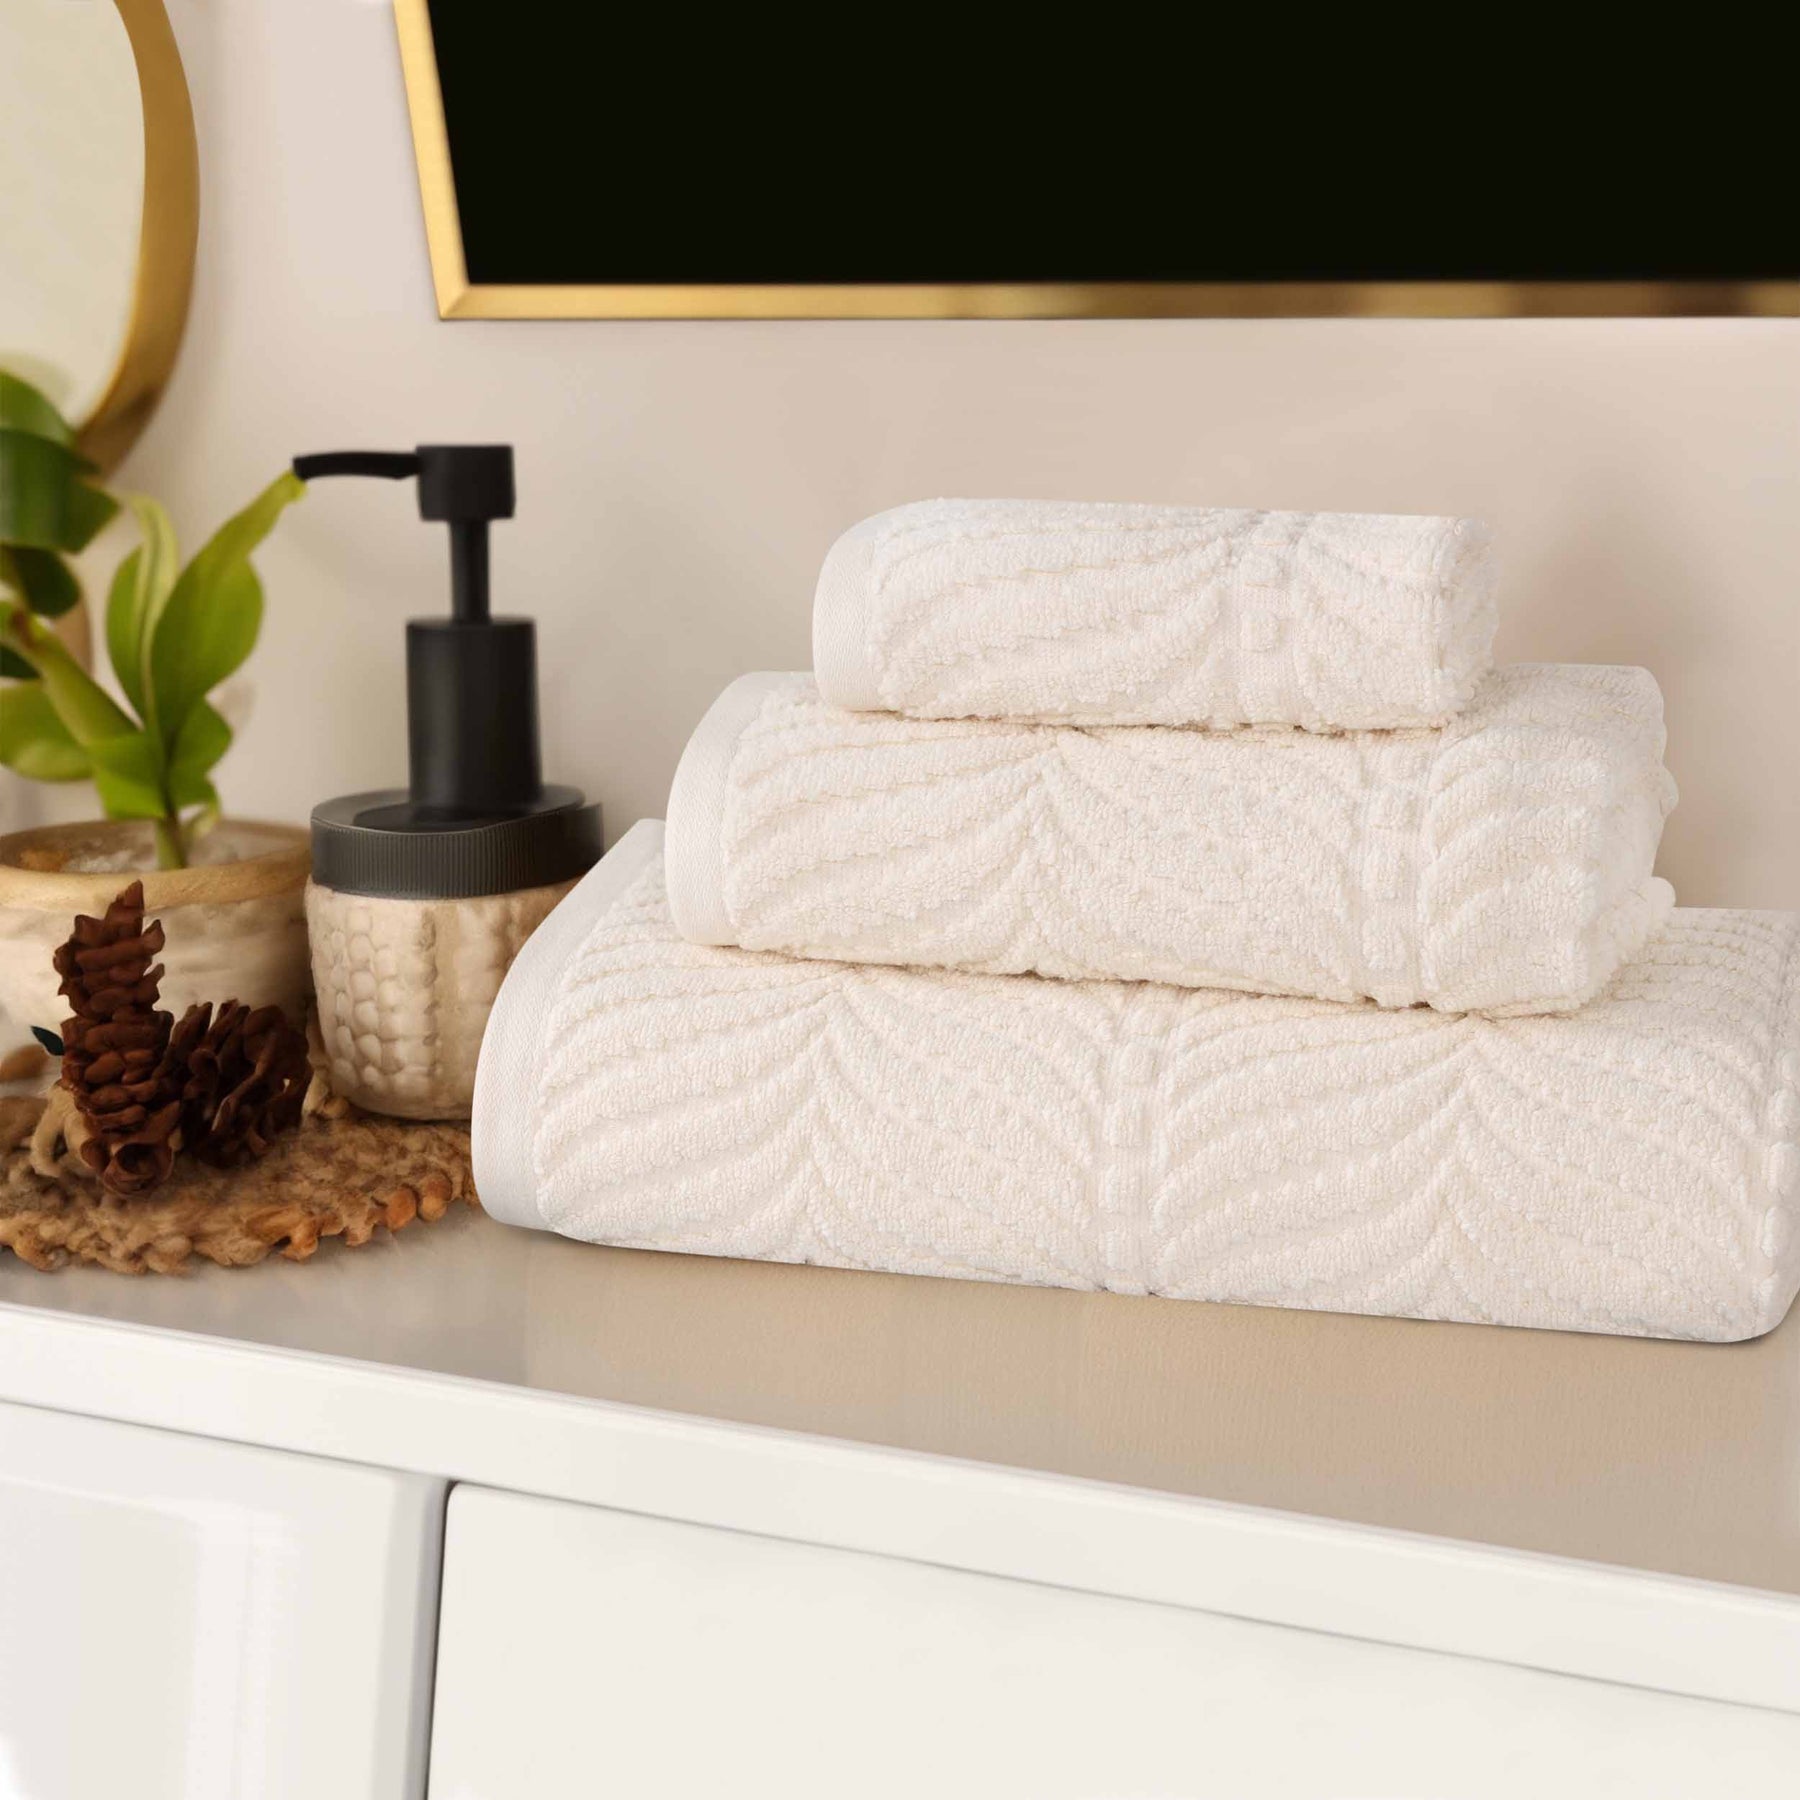 Chevron Zero Twist Cotton 3 Piece Jacquard Towel Set - Ivory